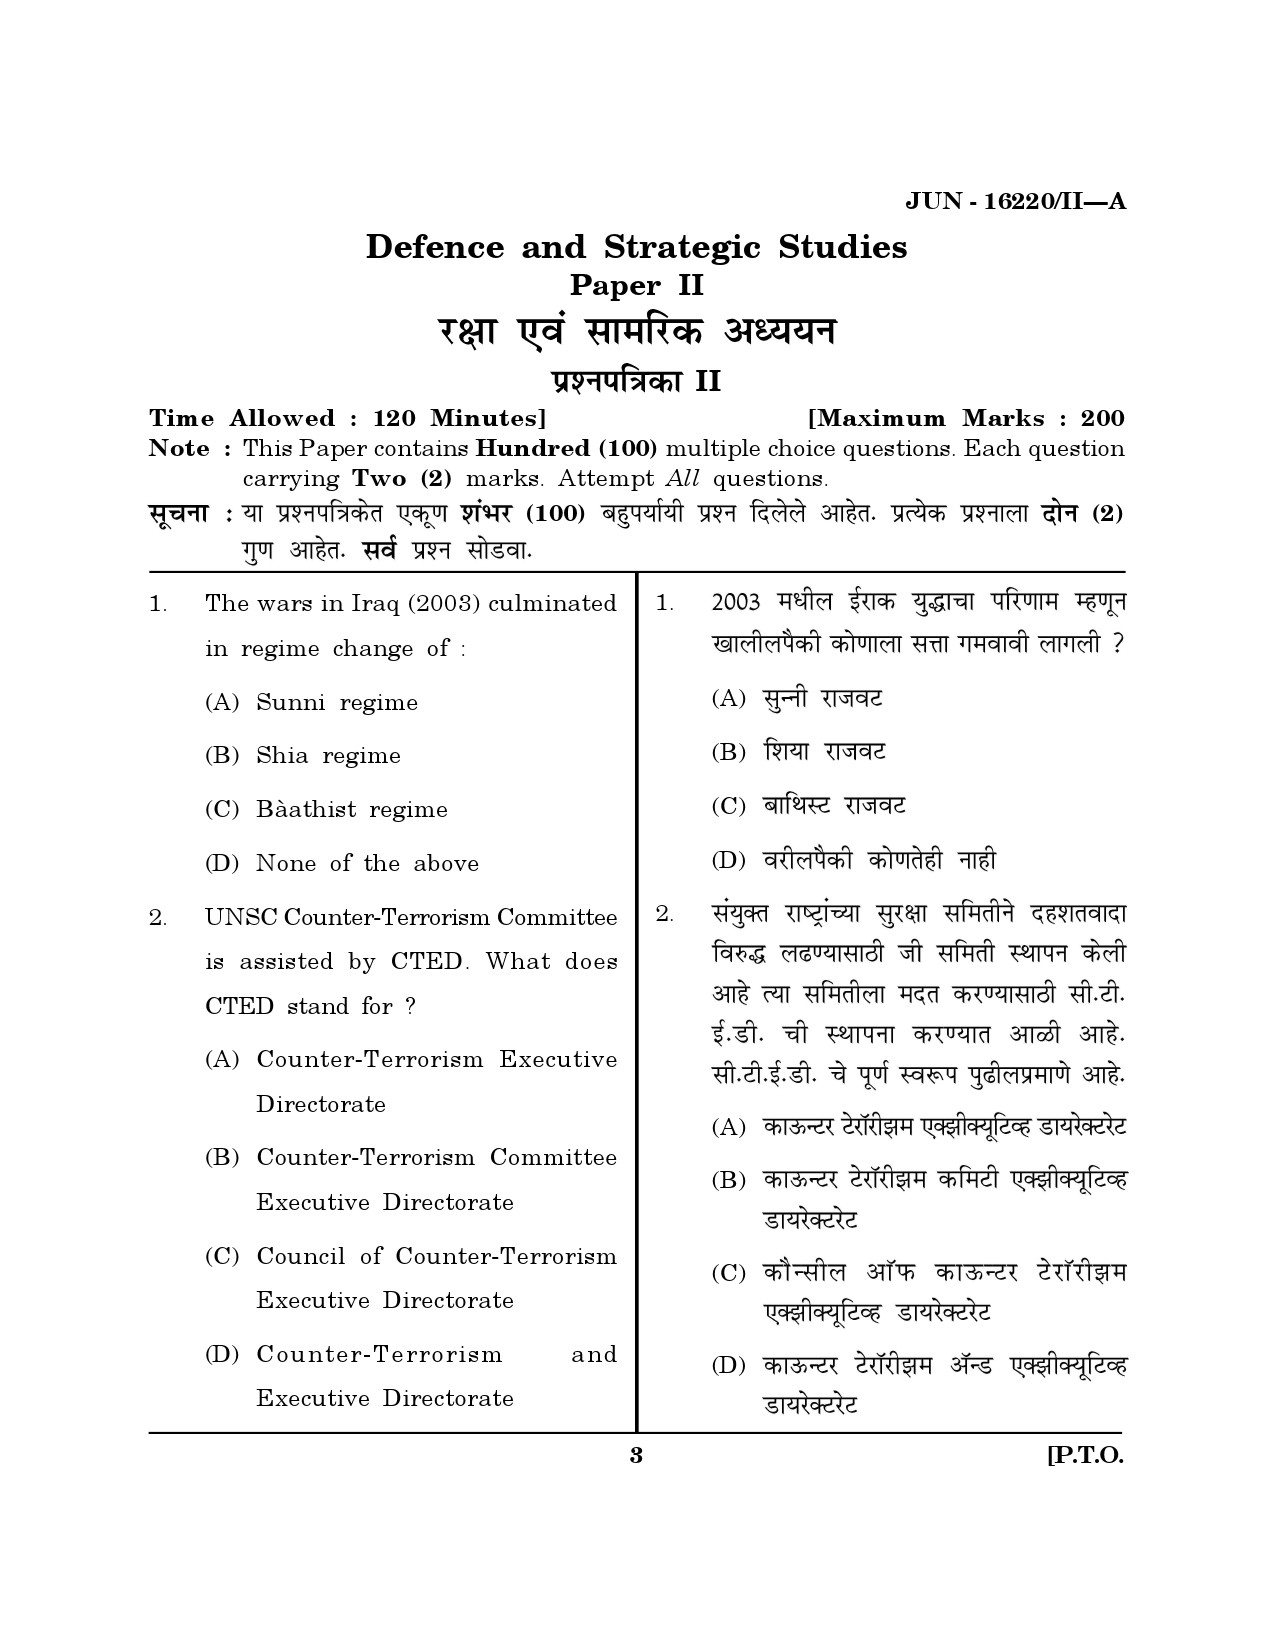 Maharashtra SET Defence and Strategic Studies Question Paper II June 2020 2